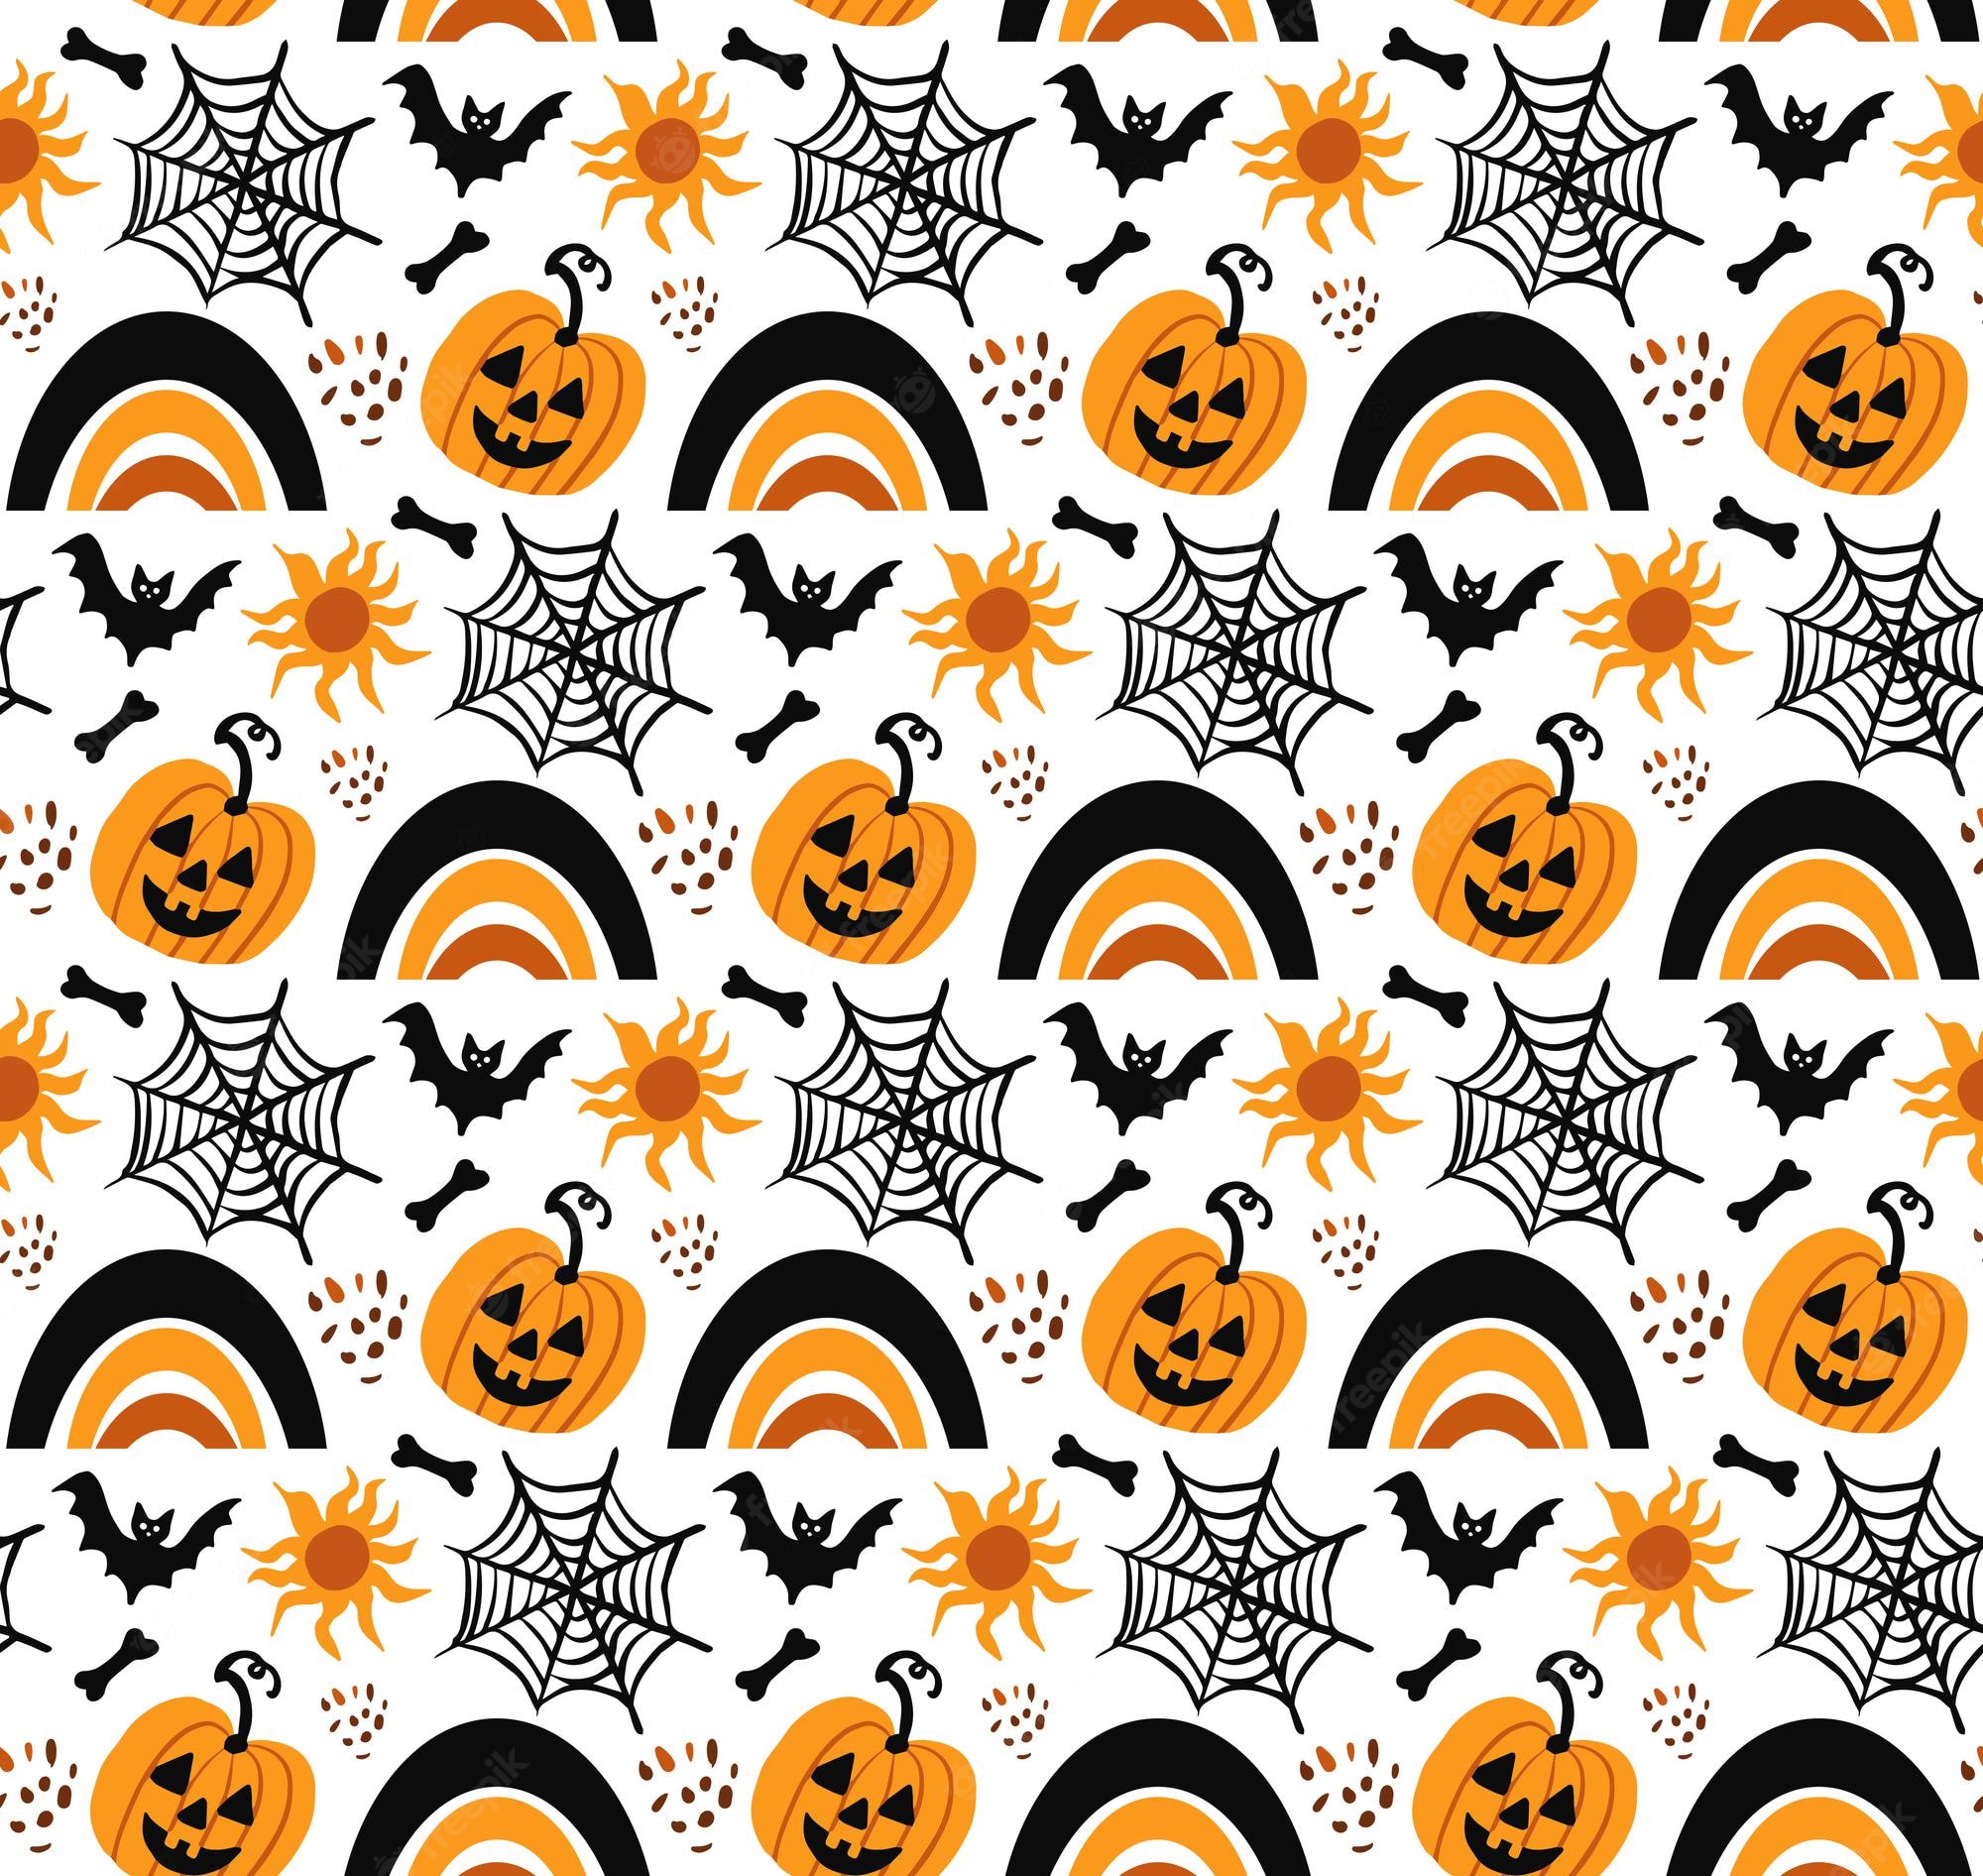 Aesthetic halloween wallpaper Image. Free Vectors, & PSD